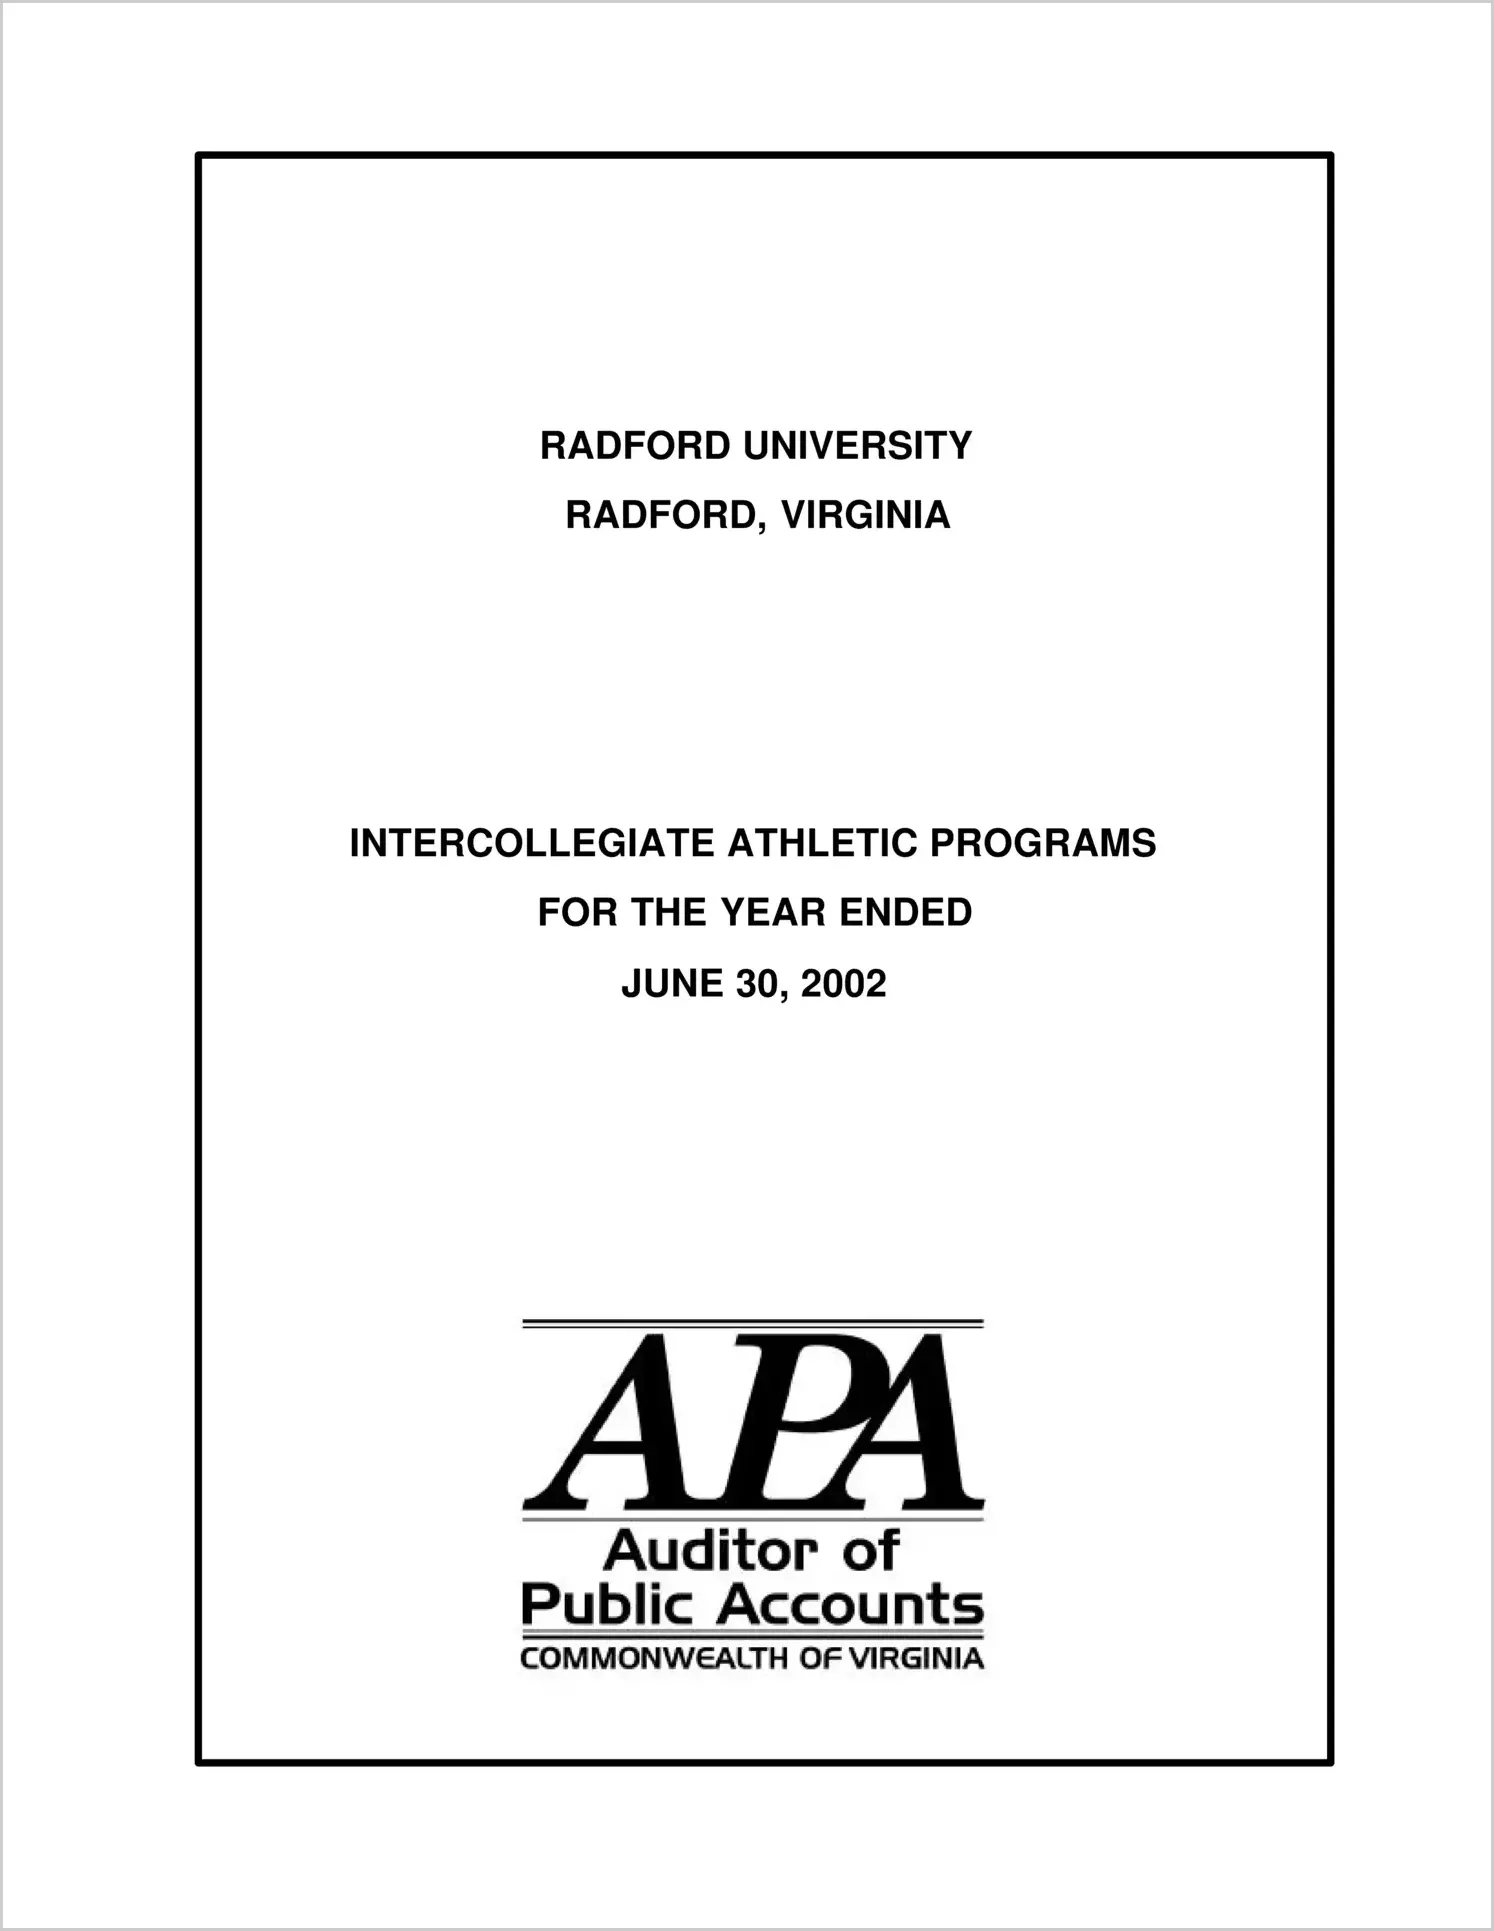 Radford University Intercollegiate Athletic Programs for the year ended June 30, 2002